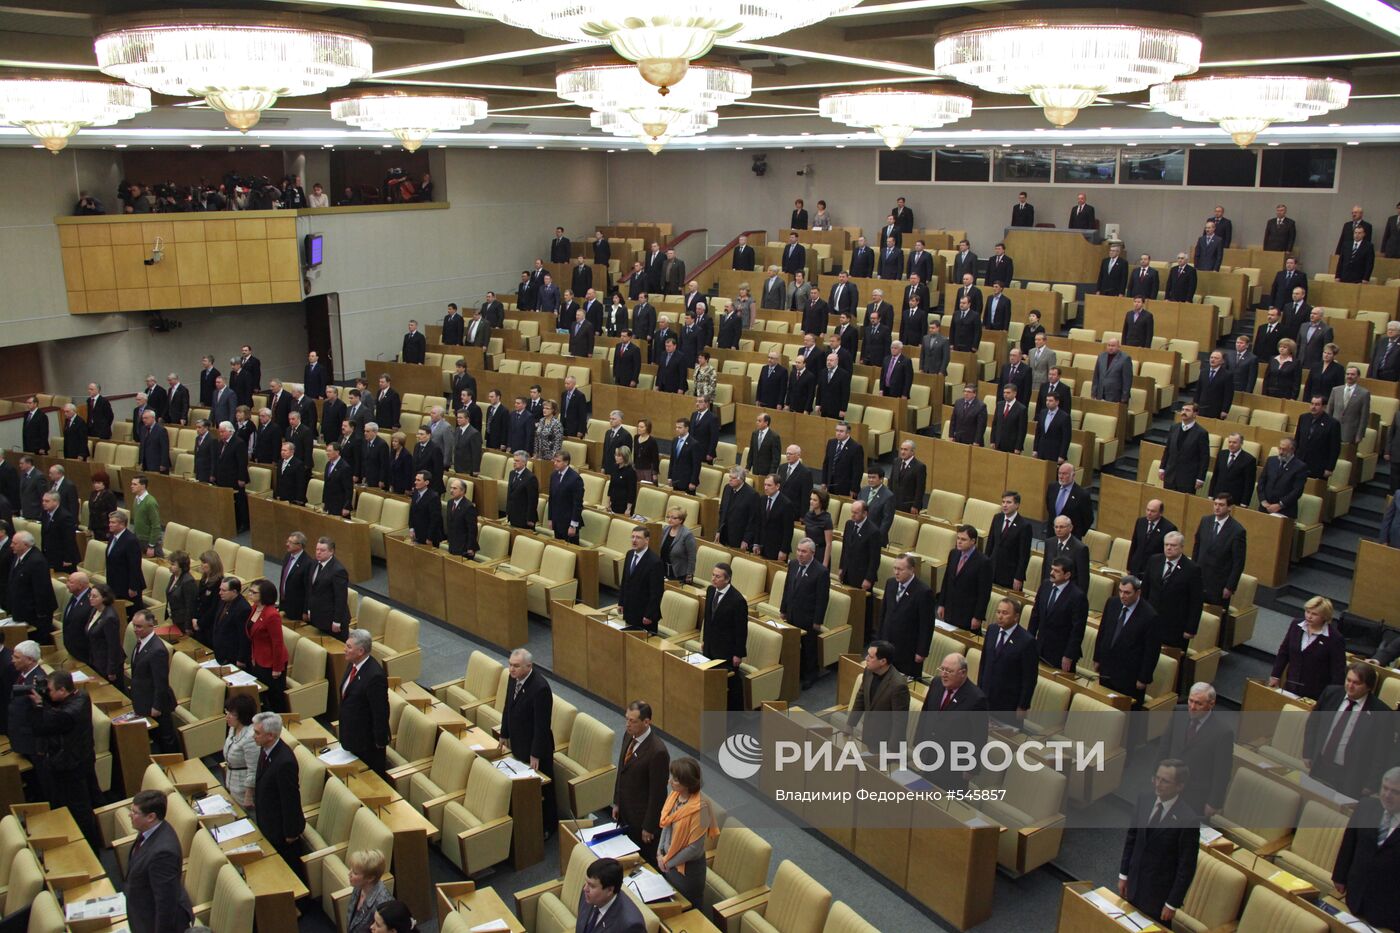 Депутаты на заседании Госдумы РФ 13 января 2010 г.